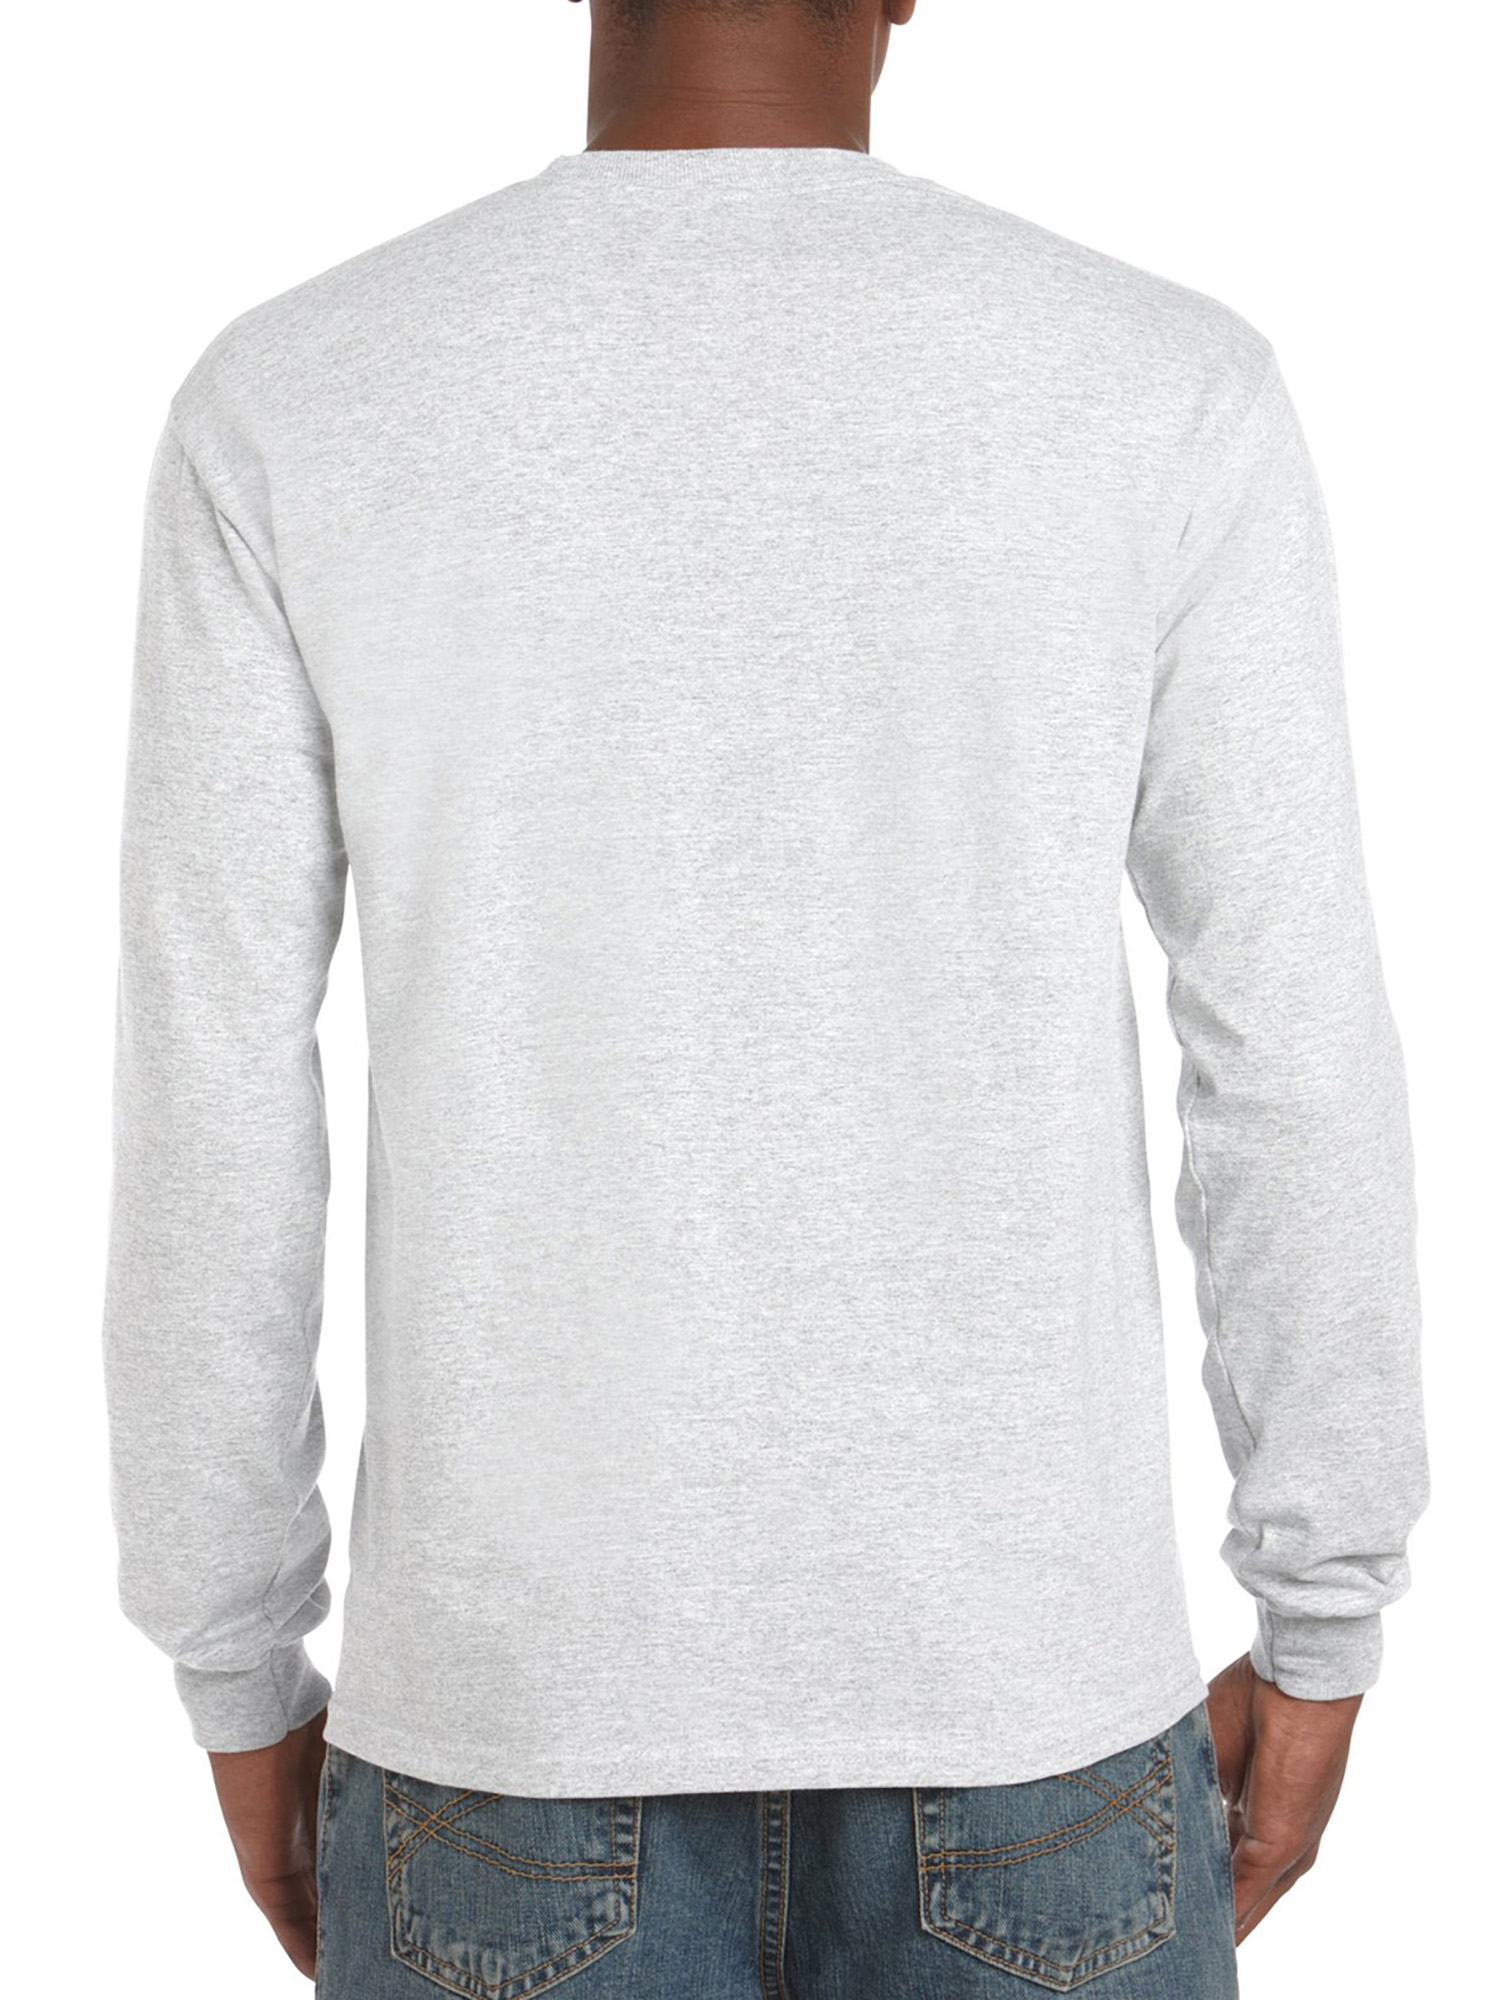 Gildan Mens Ultra Cotton Classic Long Sleeve T-Shirt - image 2 of 2